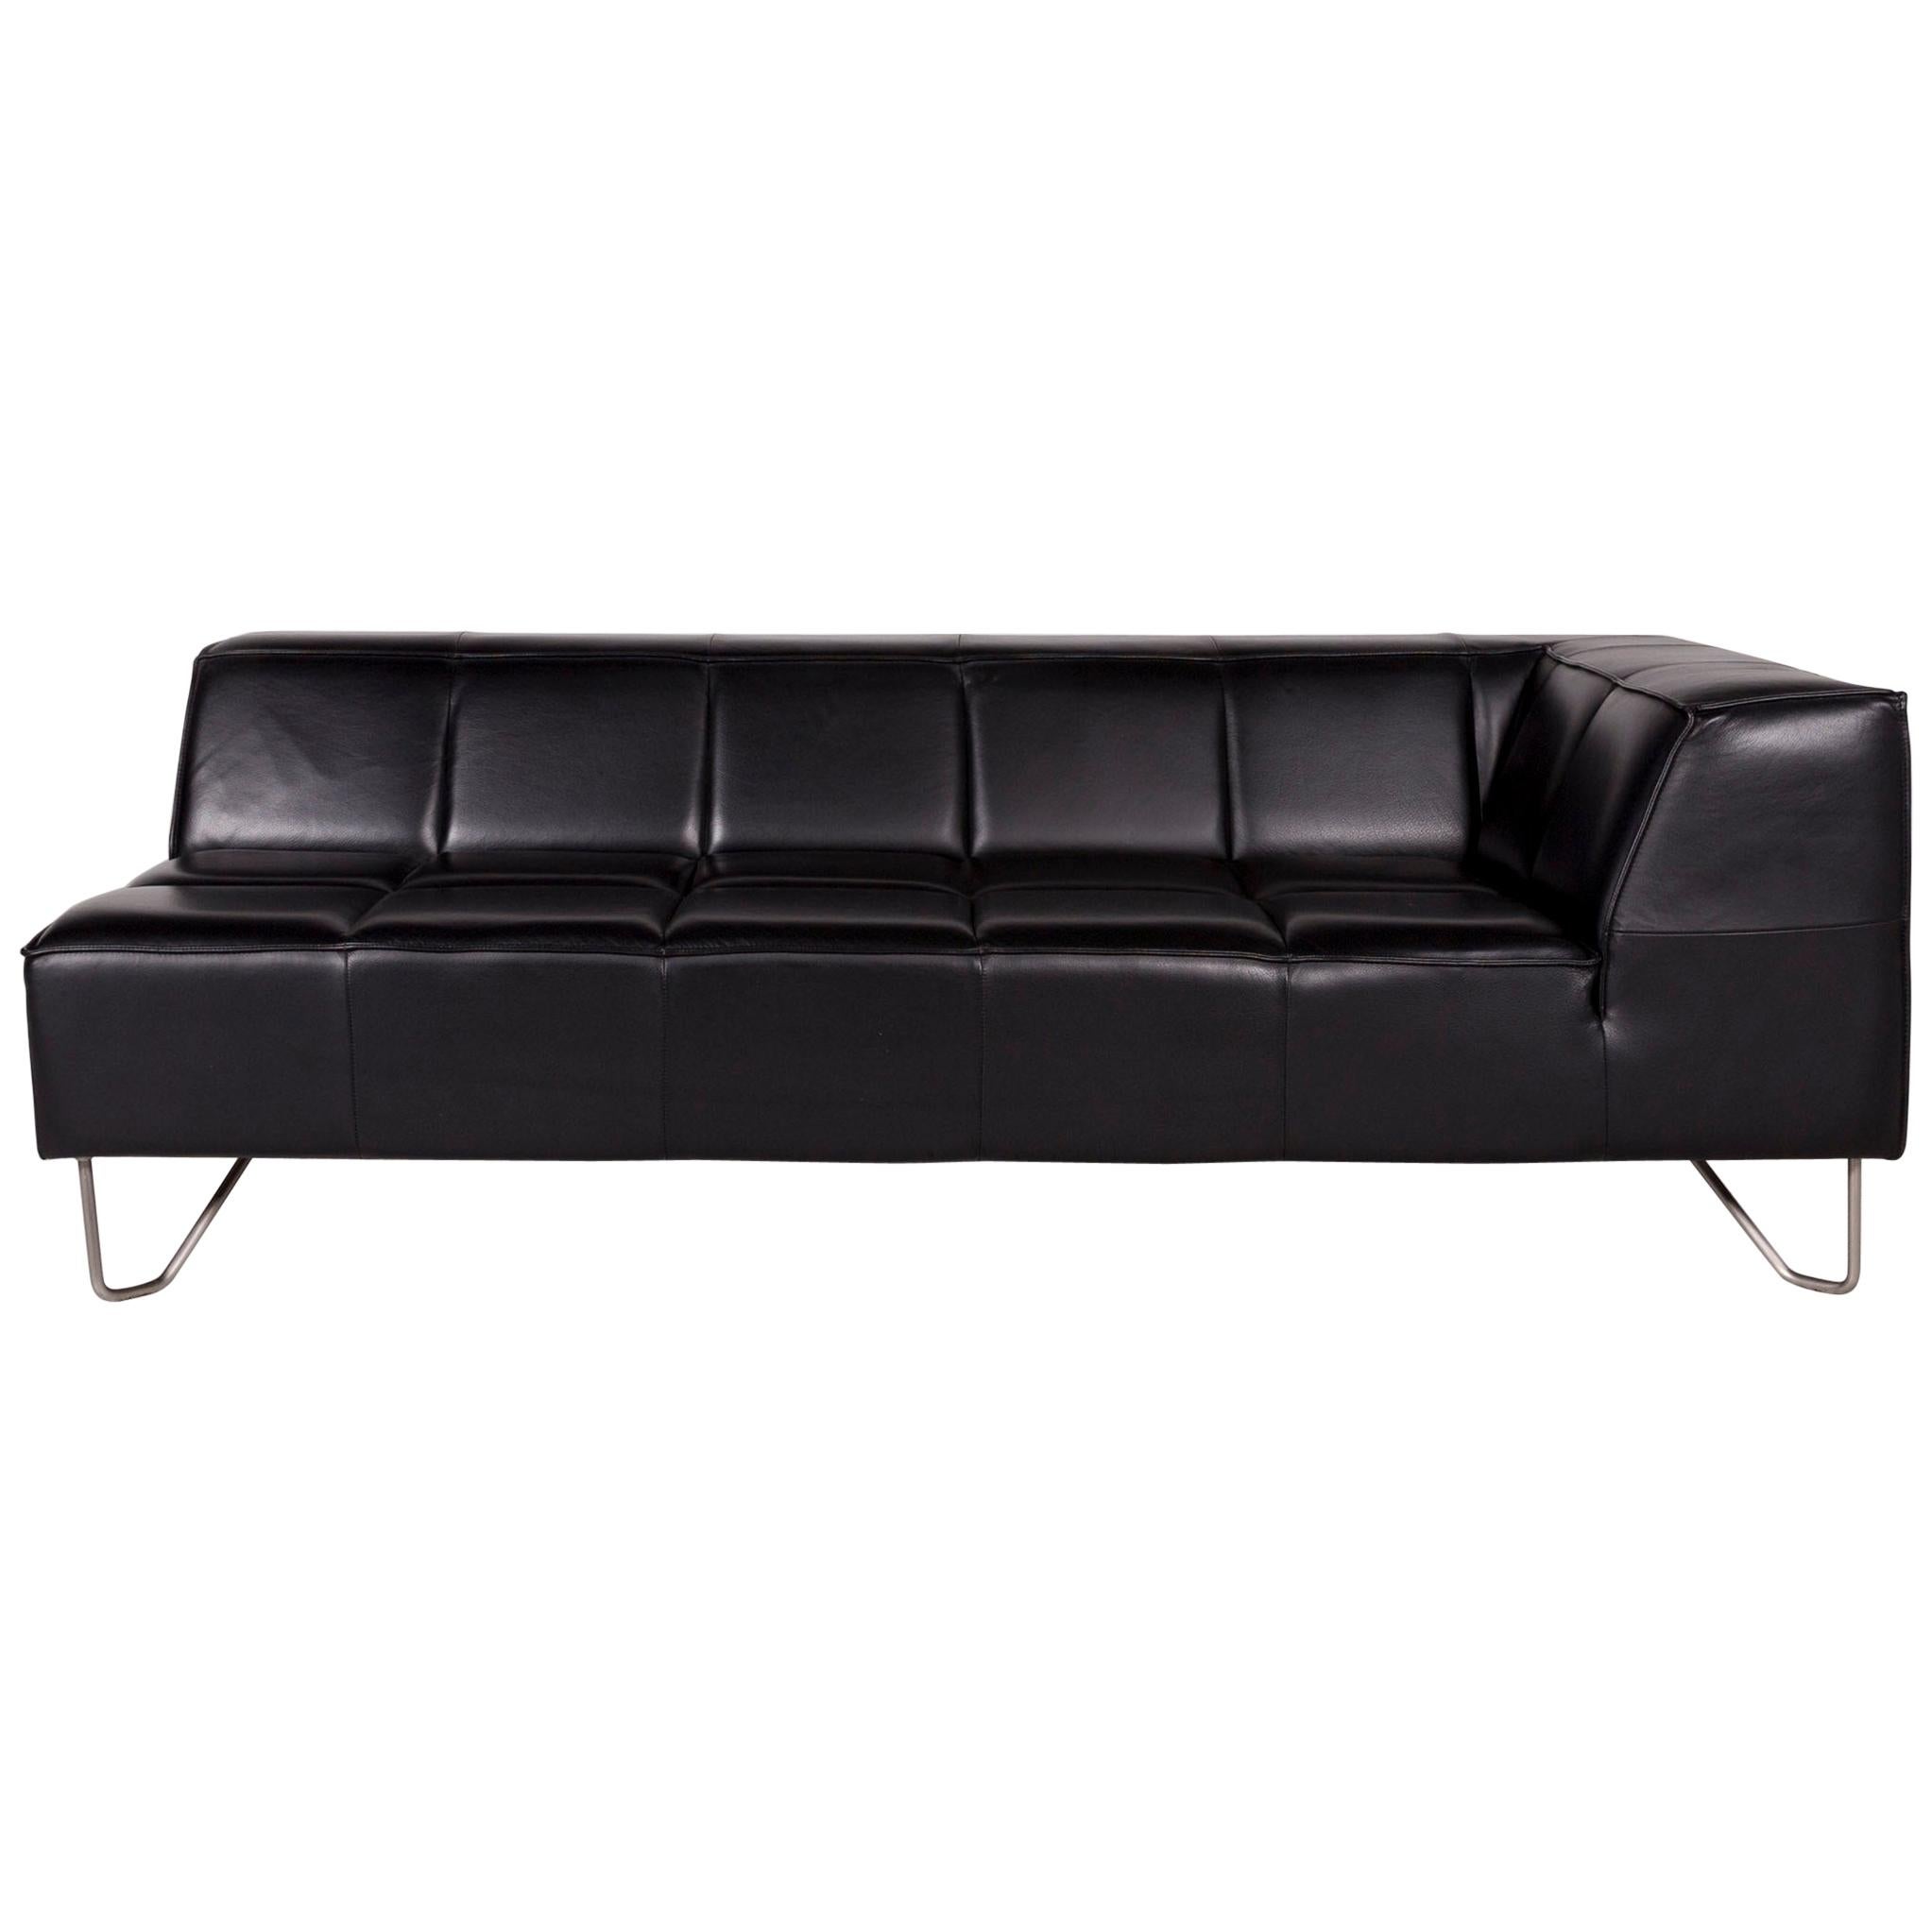 Boconcept Milos Leather Sofa Black Three-Seat For Sale